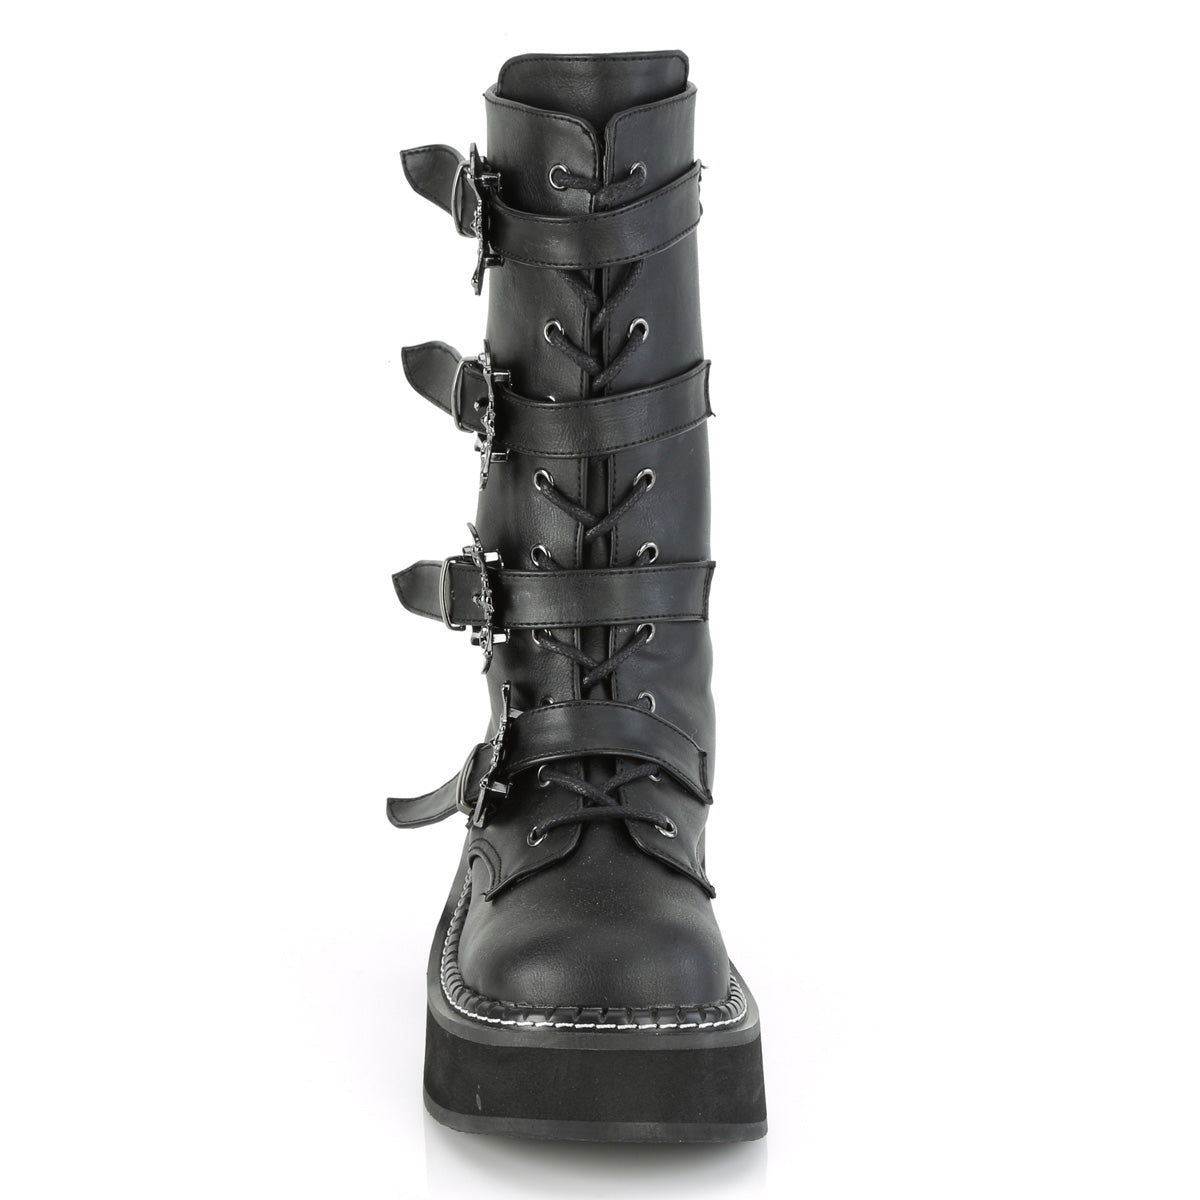 EMILY-322 Demonia Black Vegan Leather Women's Mid-Calf & Knee High Boots [Demonia Cult Alternative Footwear]